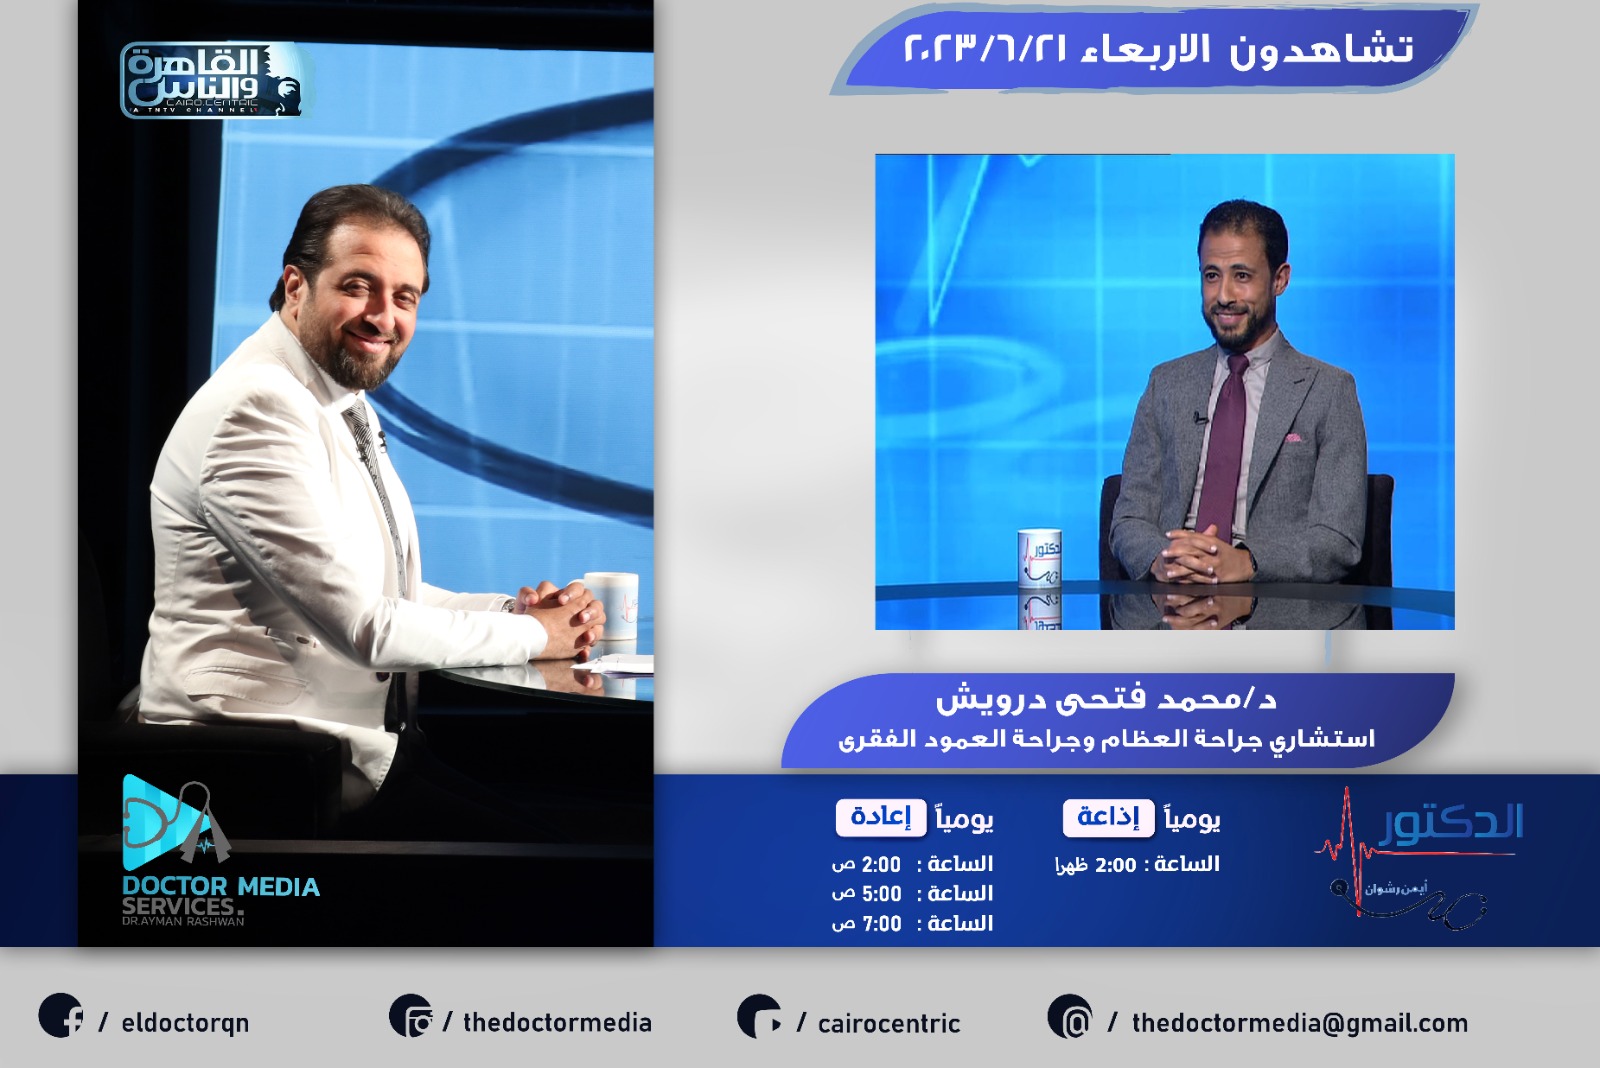 PROF. Mohamed Fathy Darwesh (PROFESSOR OF Orthopedics) AND DR. AYMAN RASHWAN ON AL-QAHERA AND AL-NAS TV